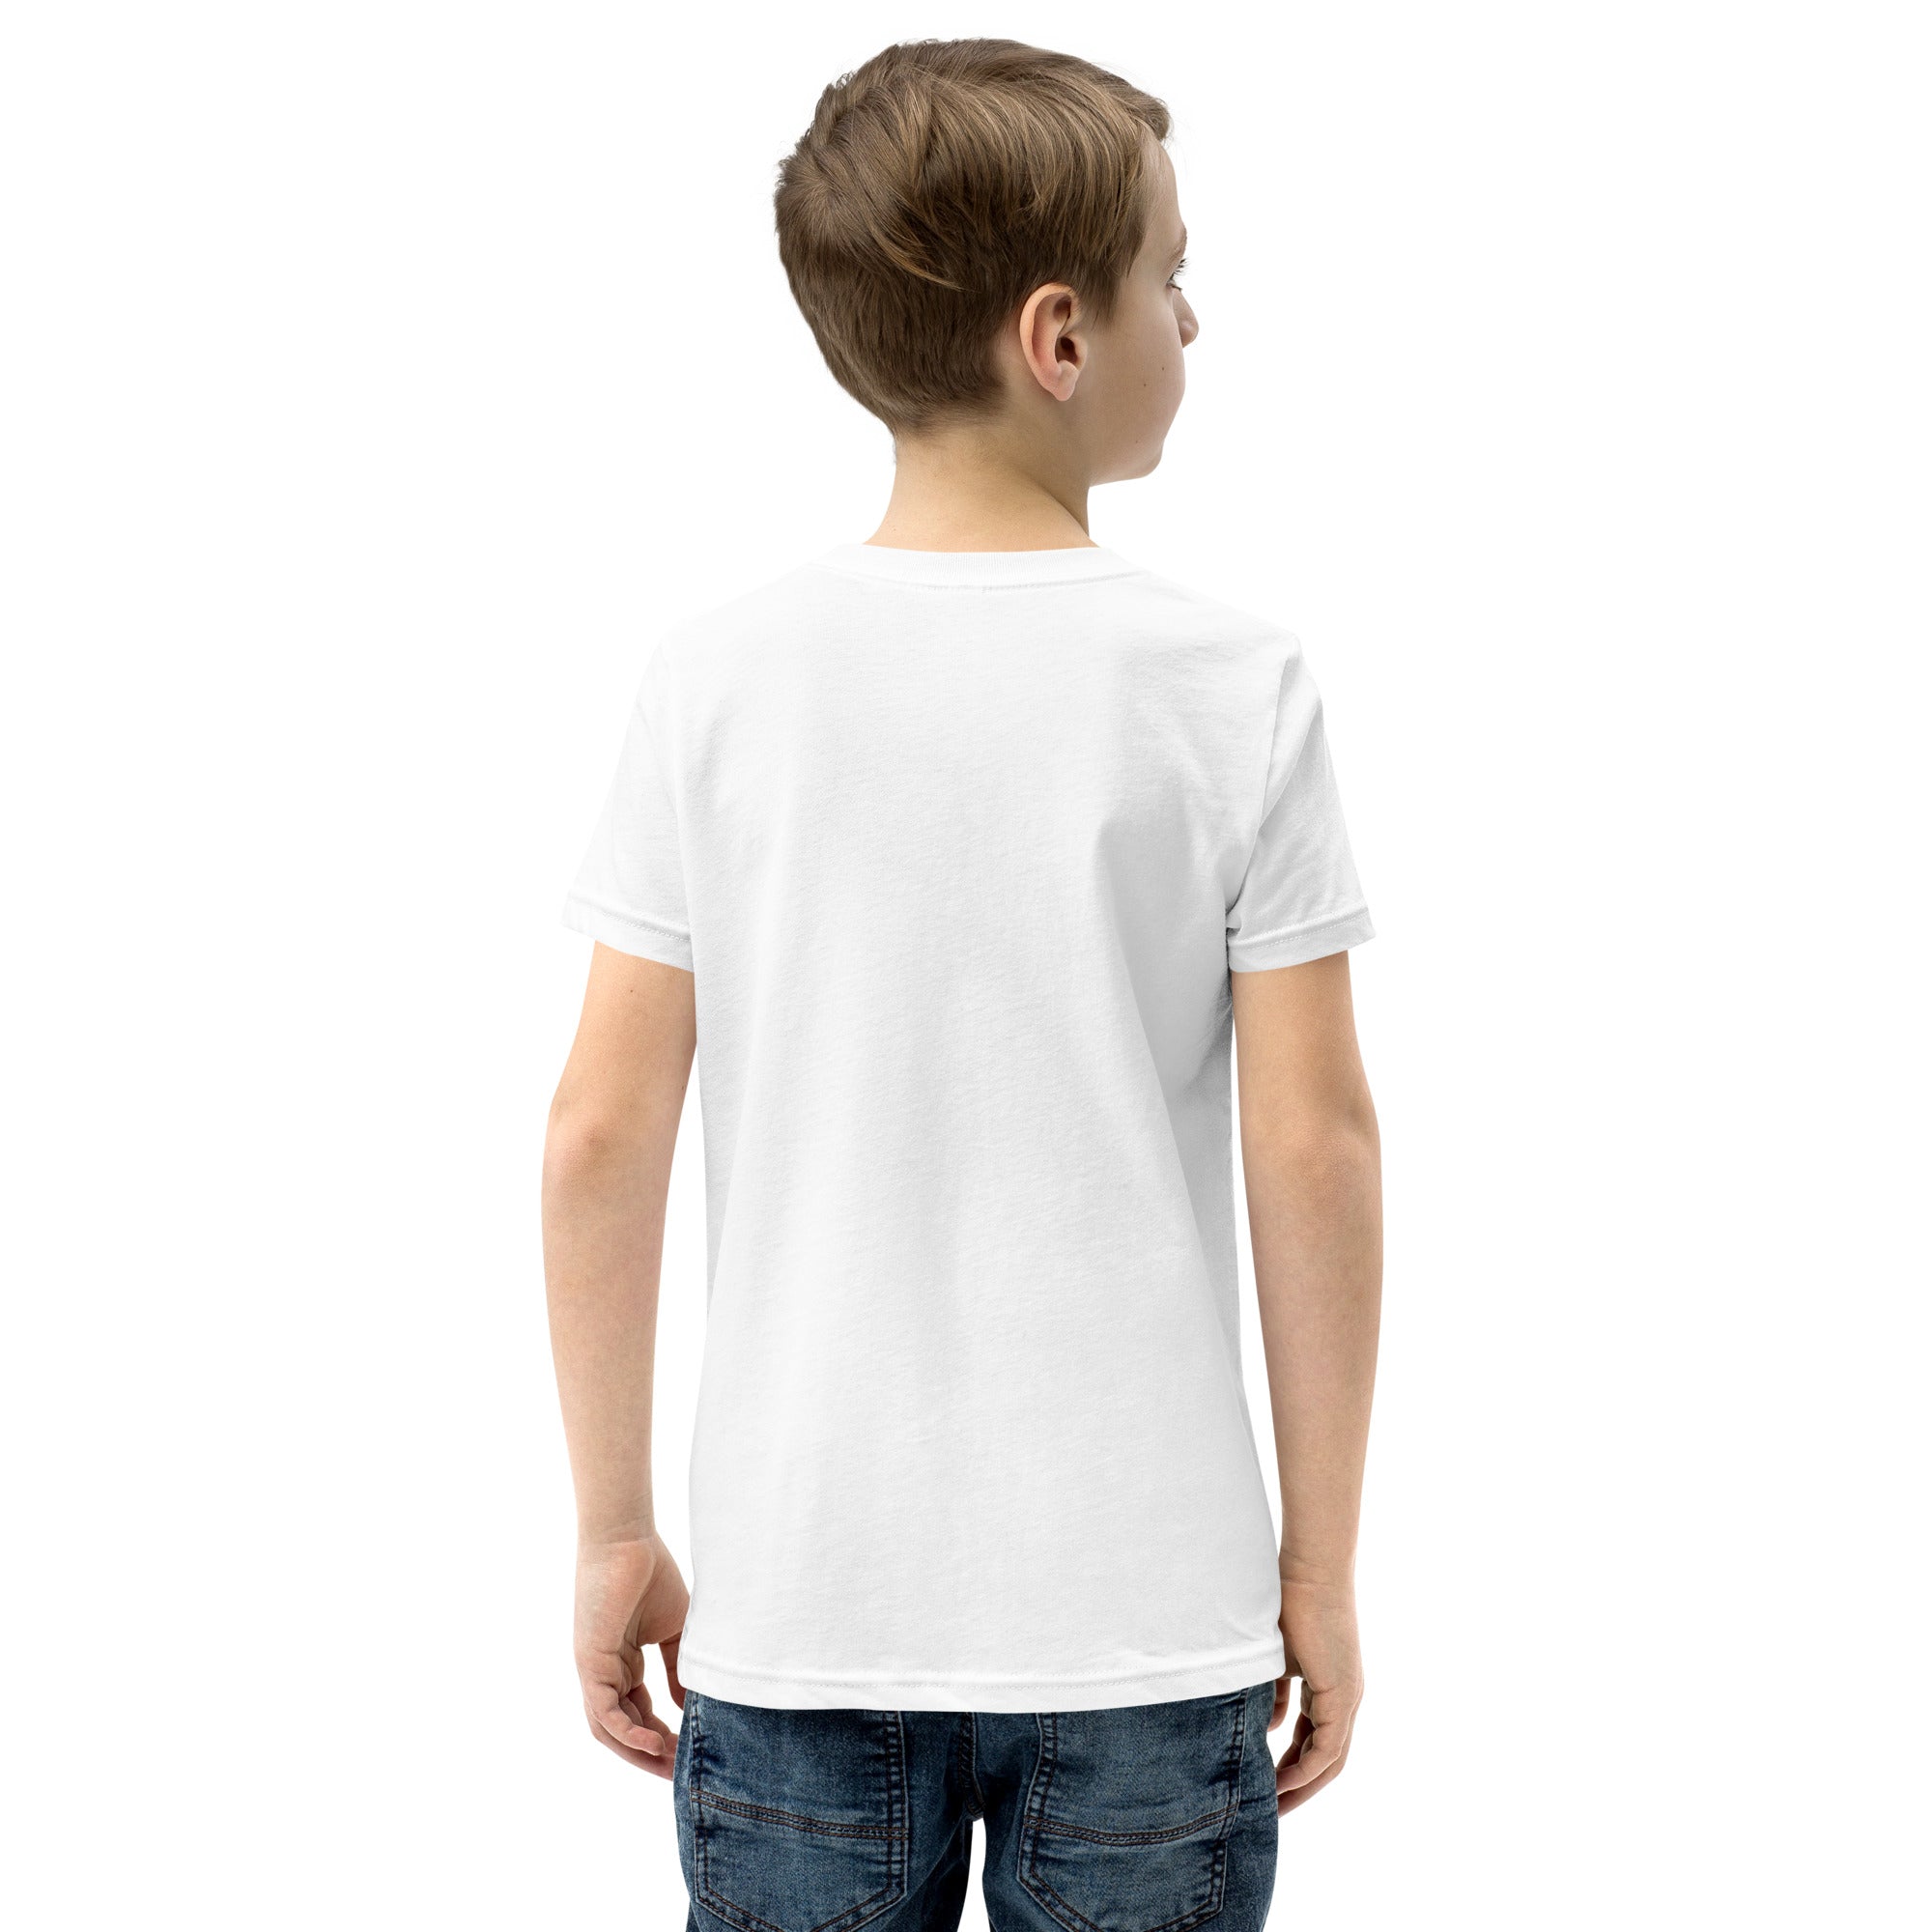 Delaware Logo R/B - White Youth Short Sleeve T-Shirt